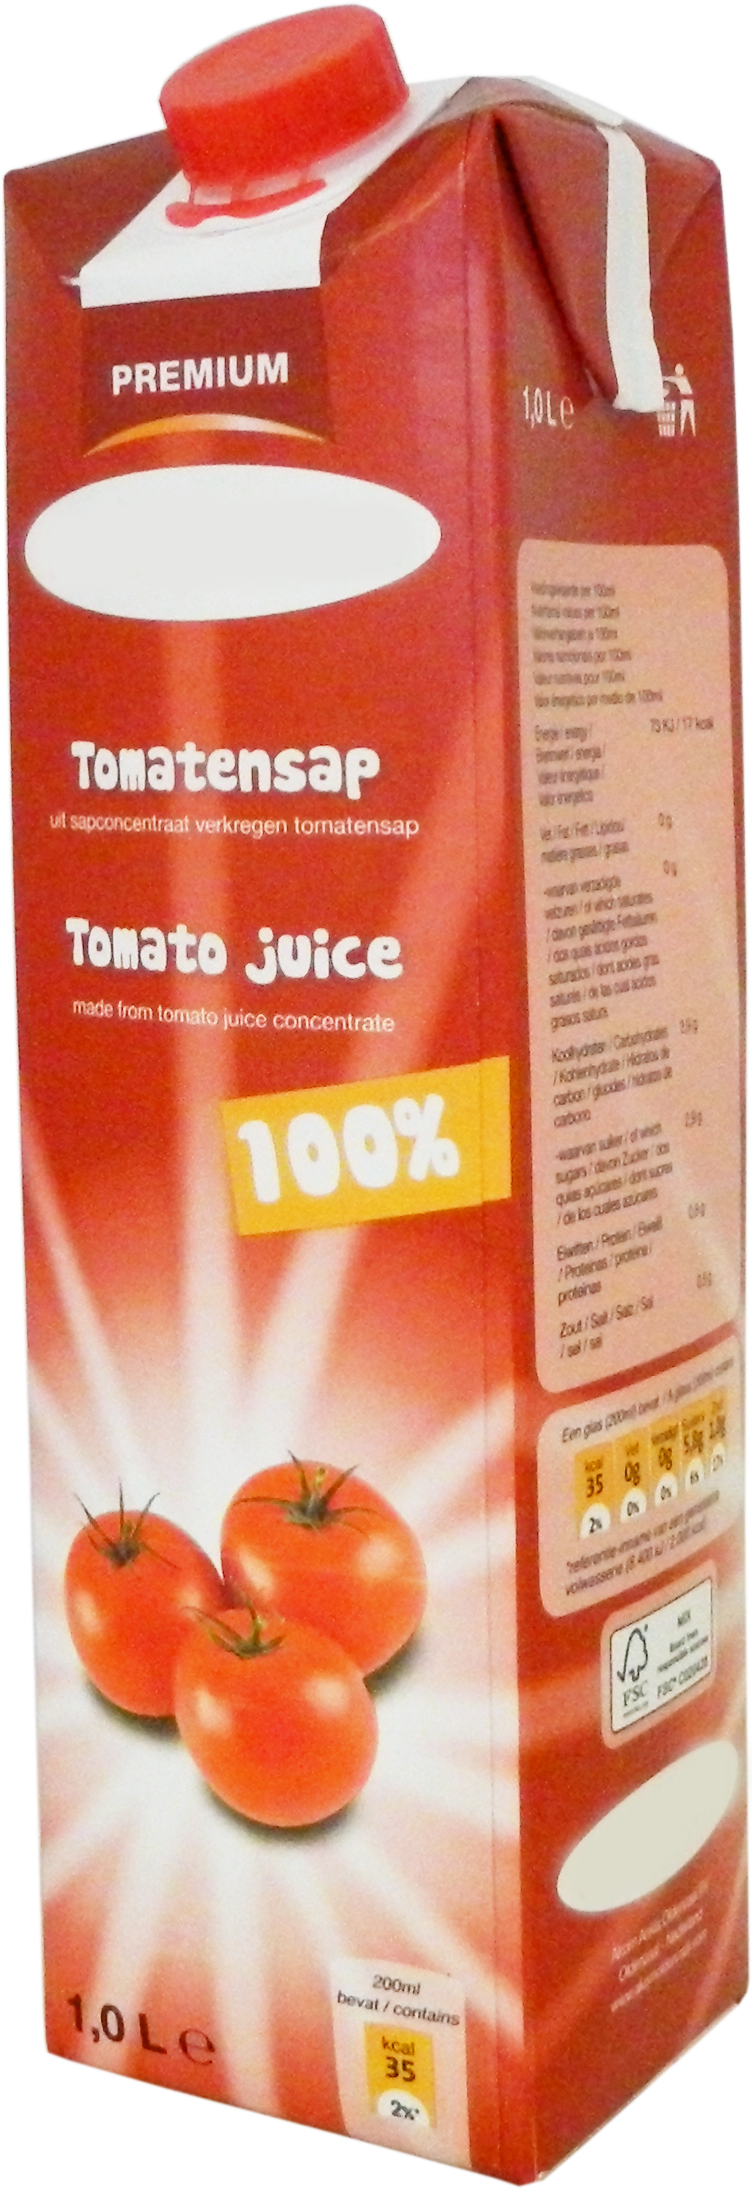 Fruit Action Tomato juice 1,0 liter